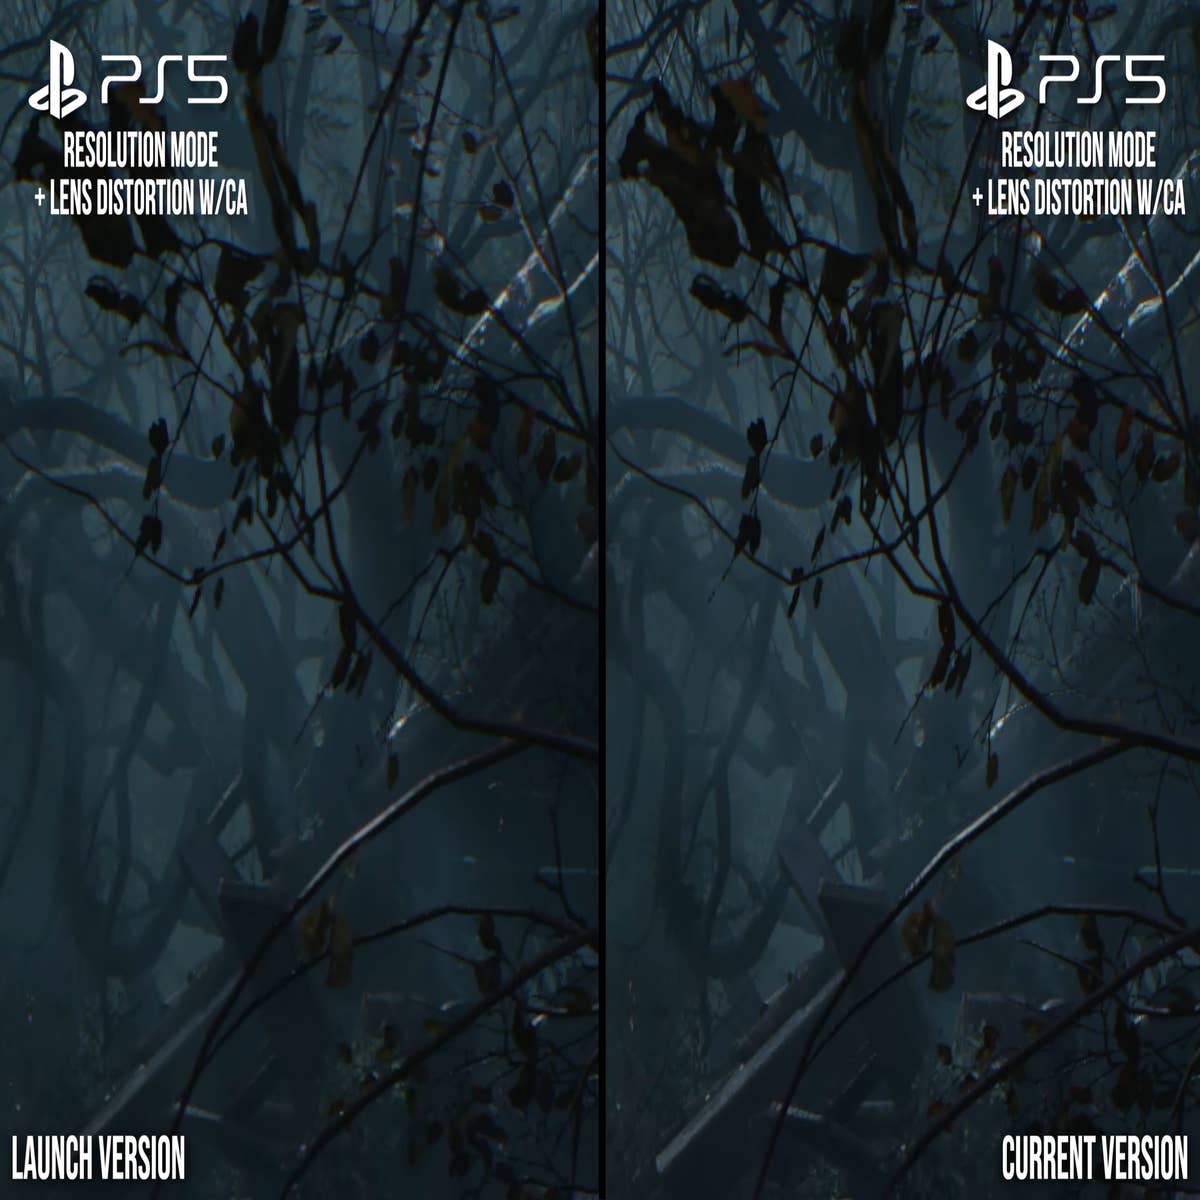 Resident Evil 4 Remake PS4 VS PS5 Comparison